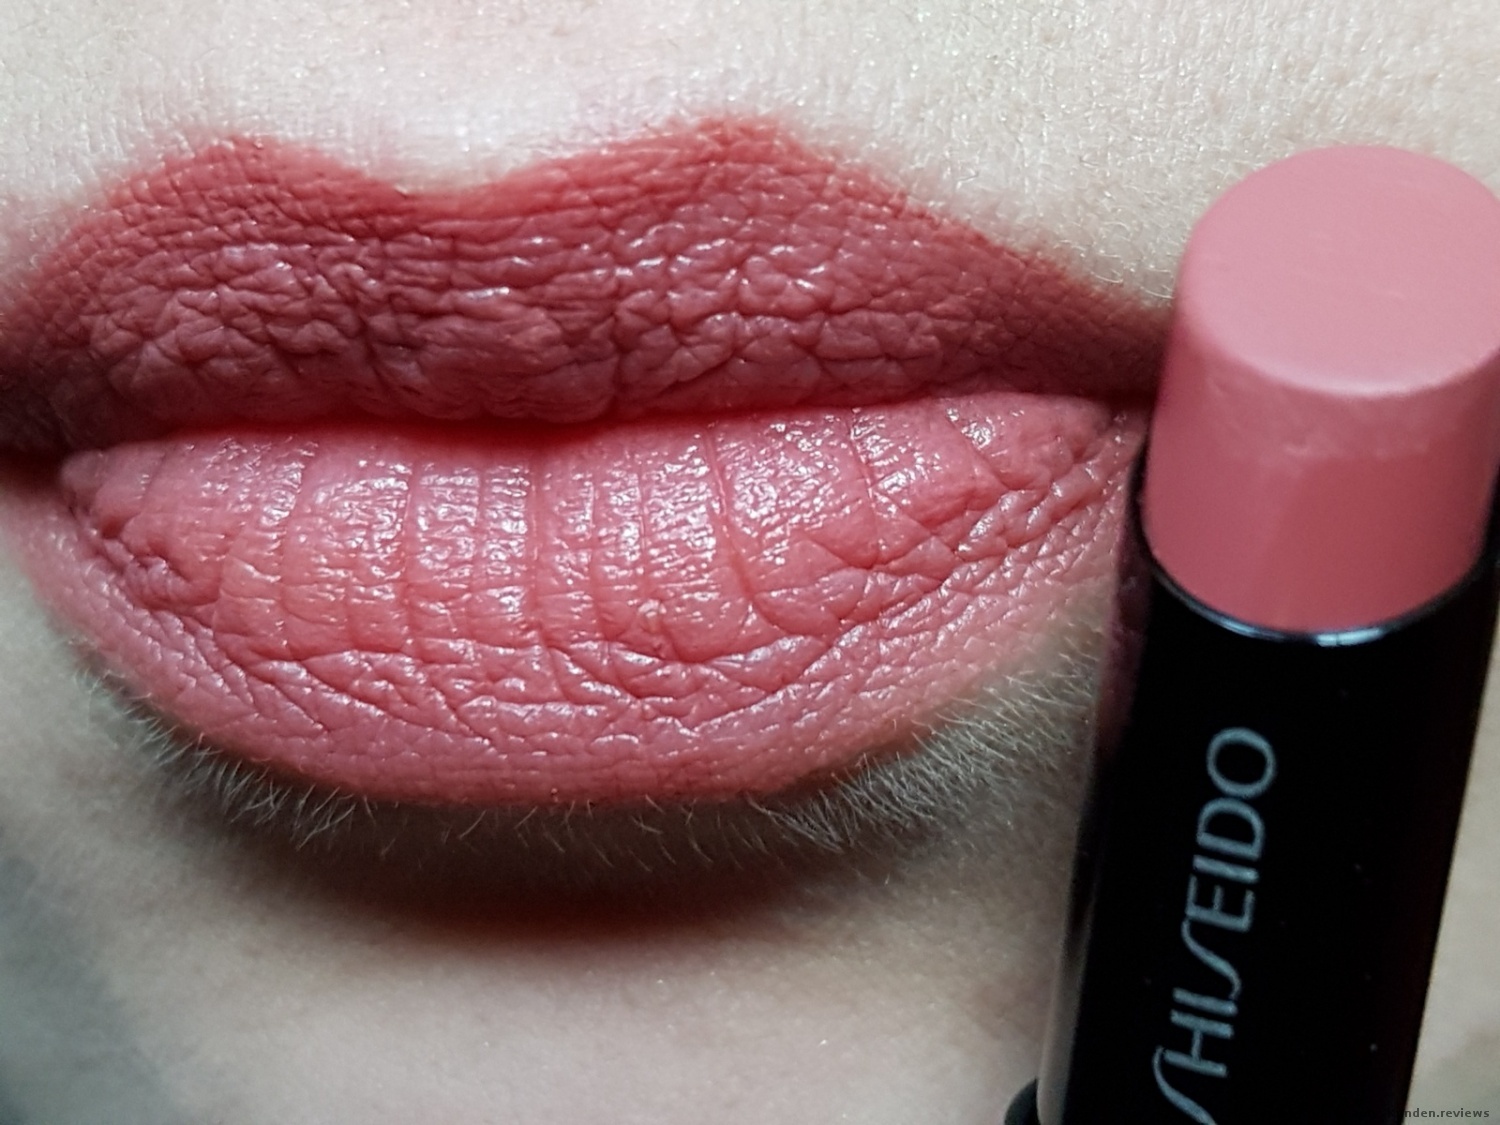 Shiseido VisionAiry Gel Lippenstift # 211 Rose Muse